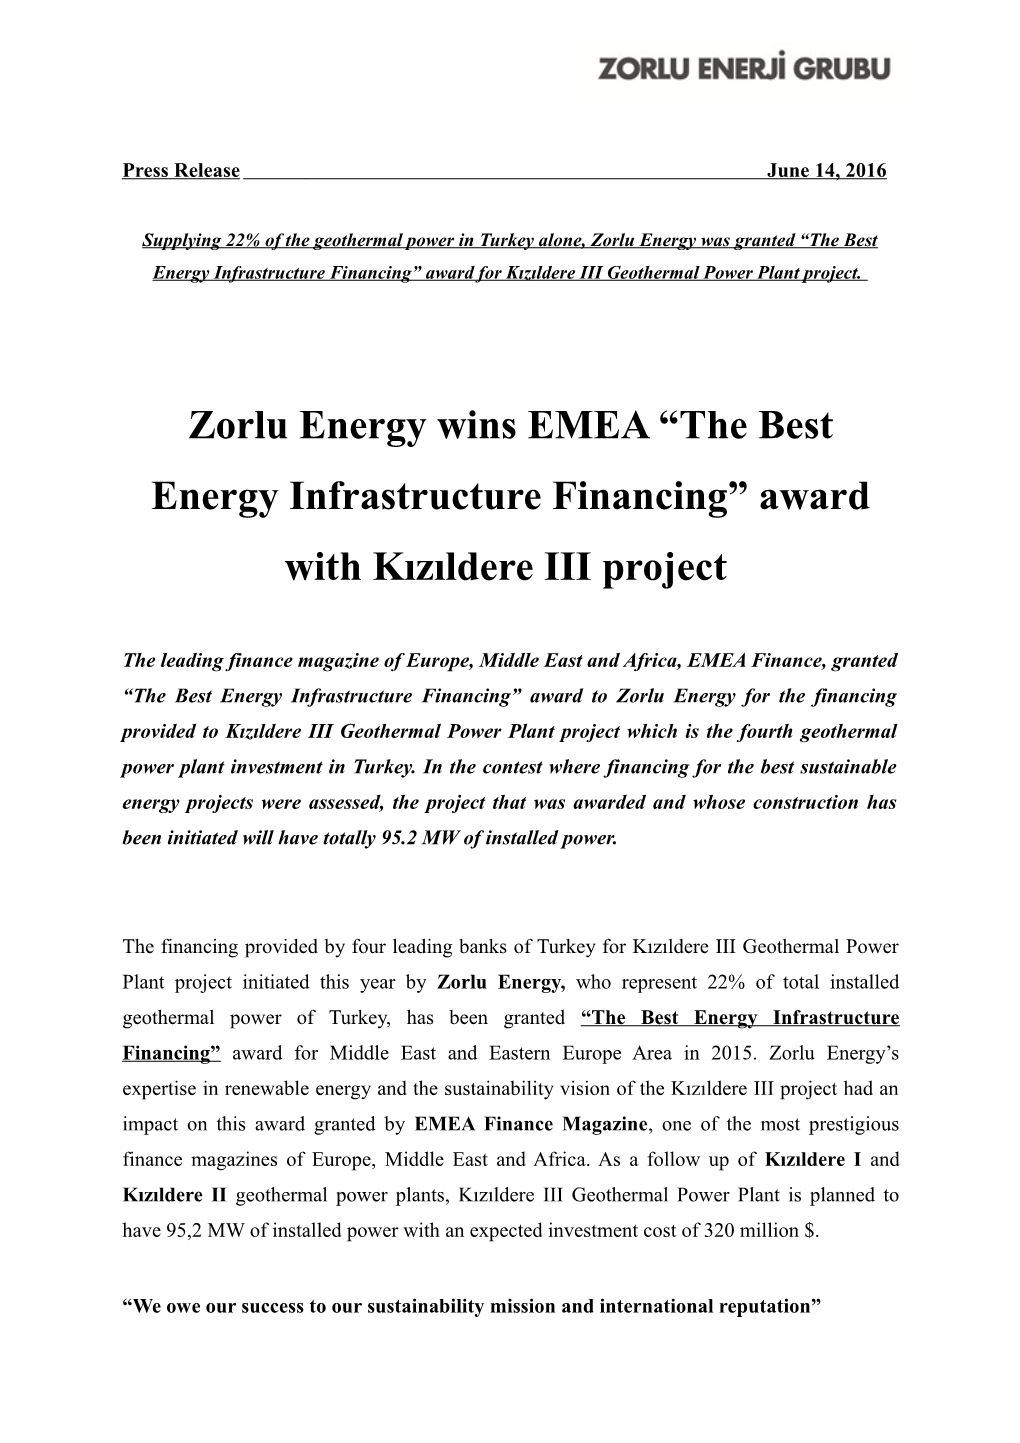 Zorlu Energy Wins EMEA the Best Energy Infrastructure Financing Award with Kızıldere III